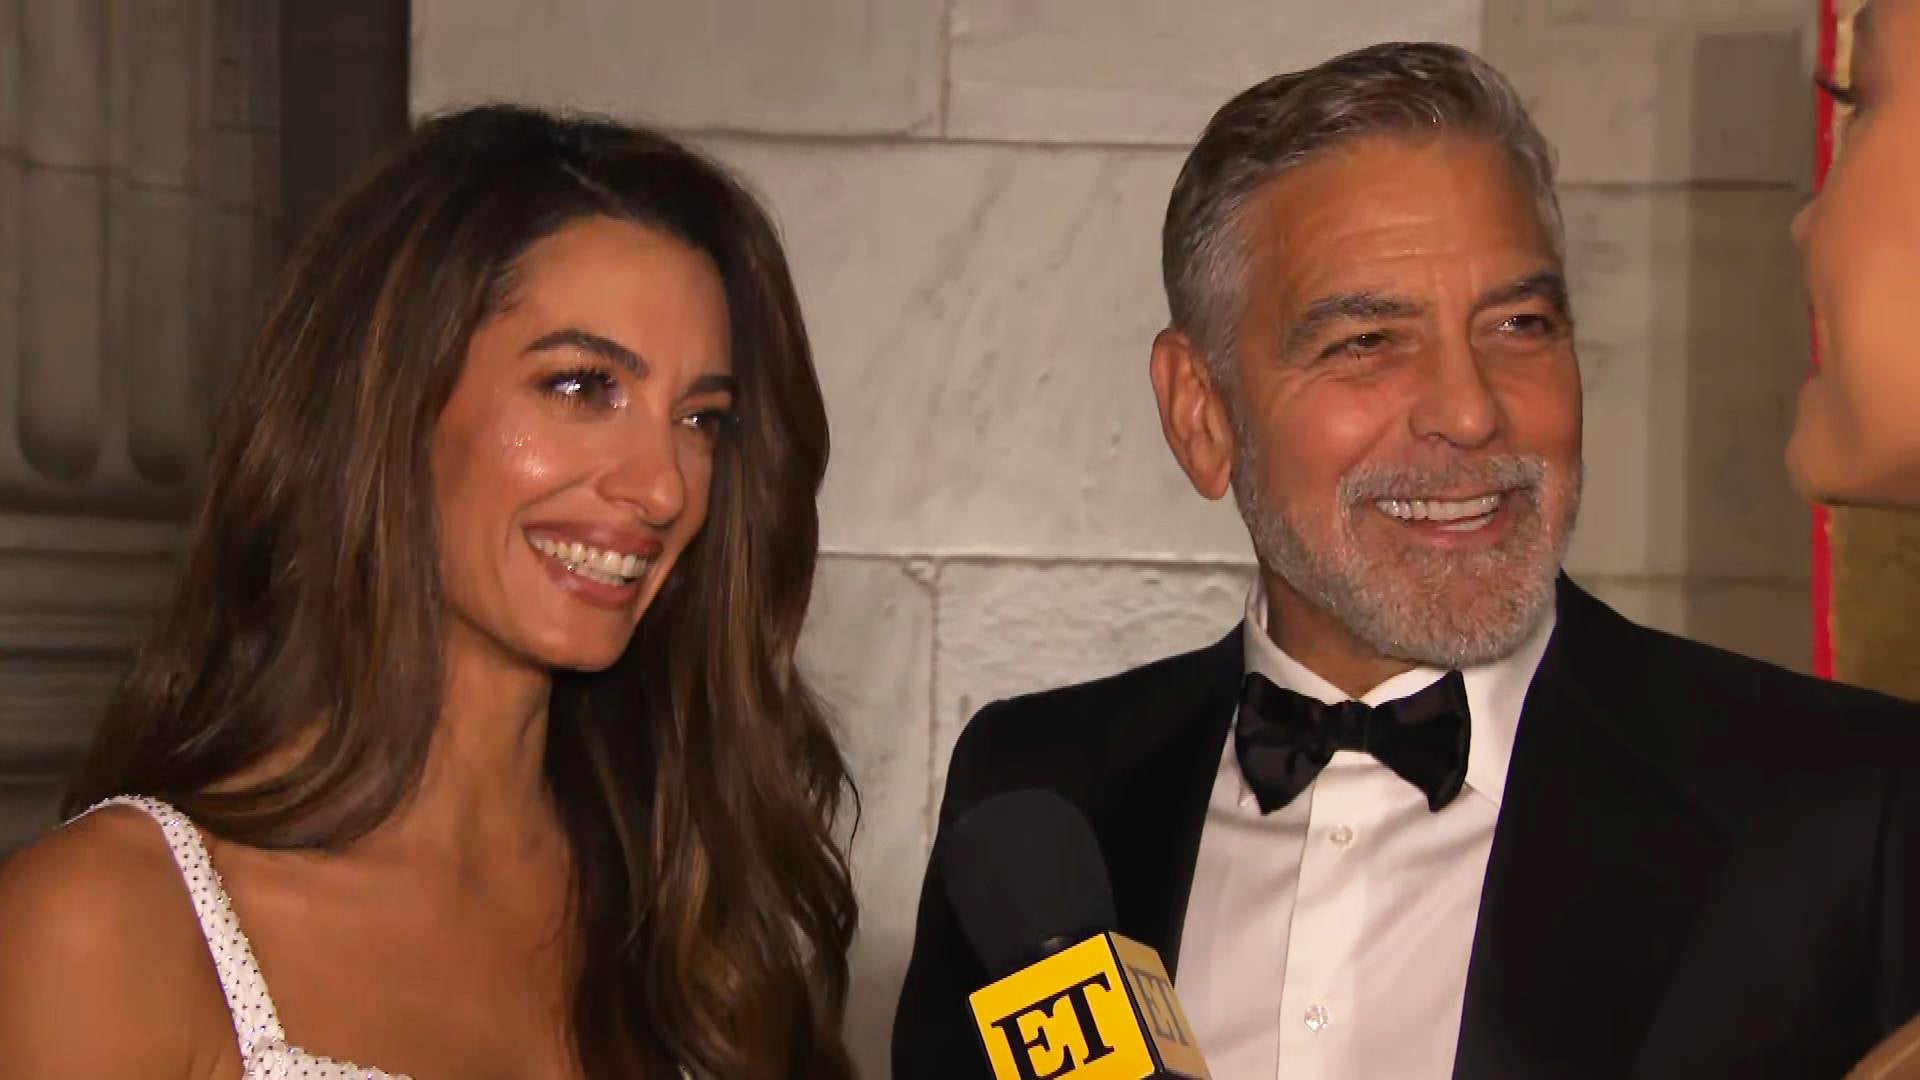 Amal Alamuddin Clooney Just Jared: Celebrity Gossip and Breaking